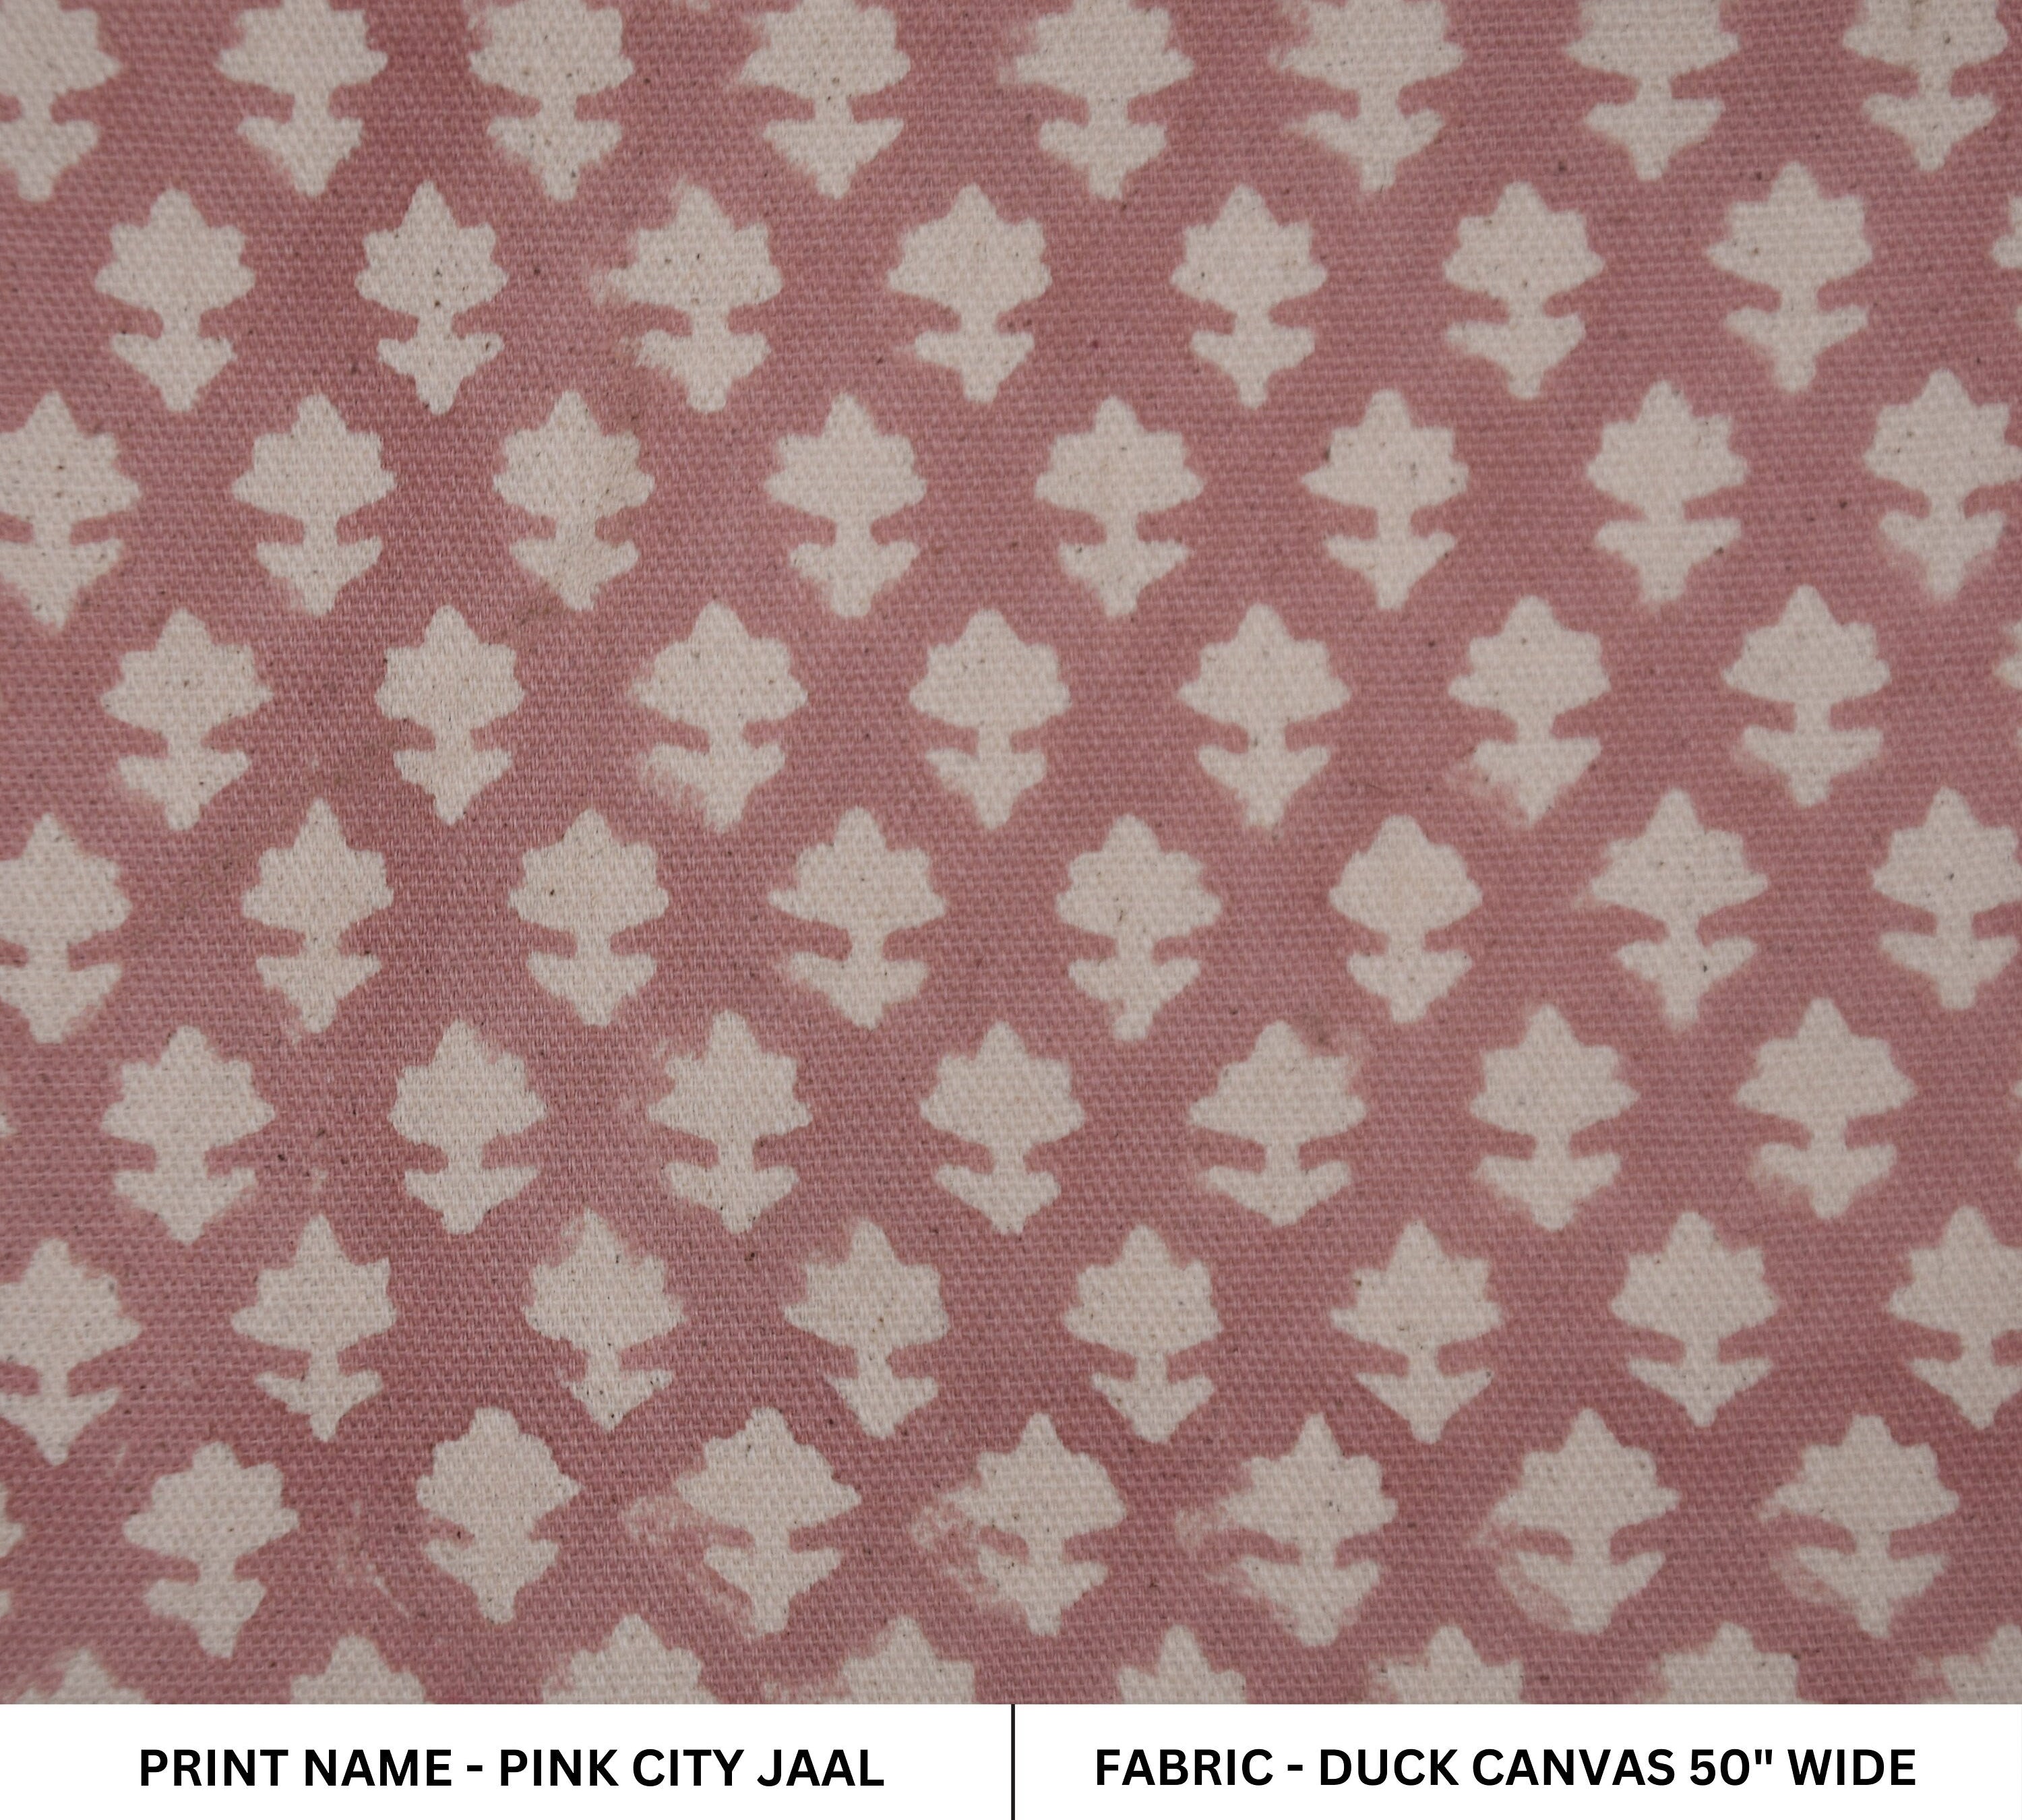 Linen cotton, duck canvas 50" wide fabric, cotton quilt fabric, Indian block print, handmade block print fabric - CROSSWORD